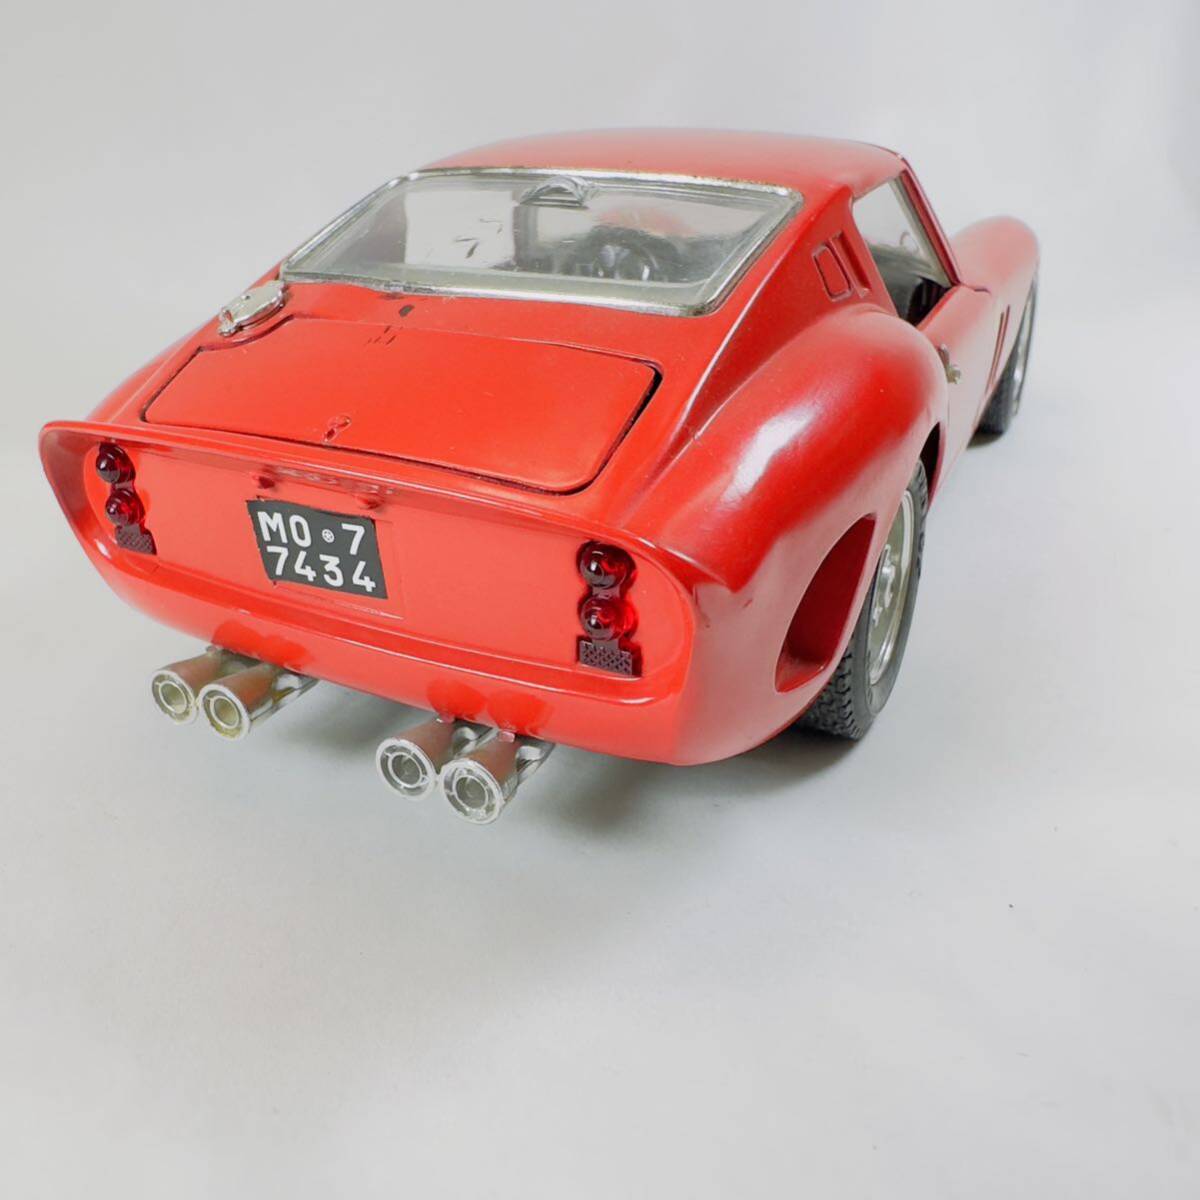 1/18 Ferrari GTO \'1962 Italy made minicar 